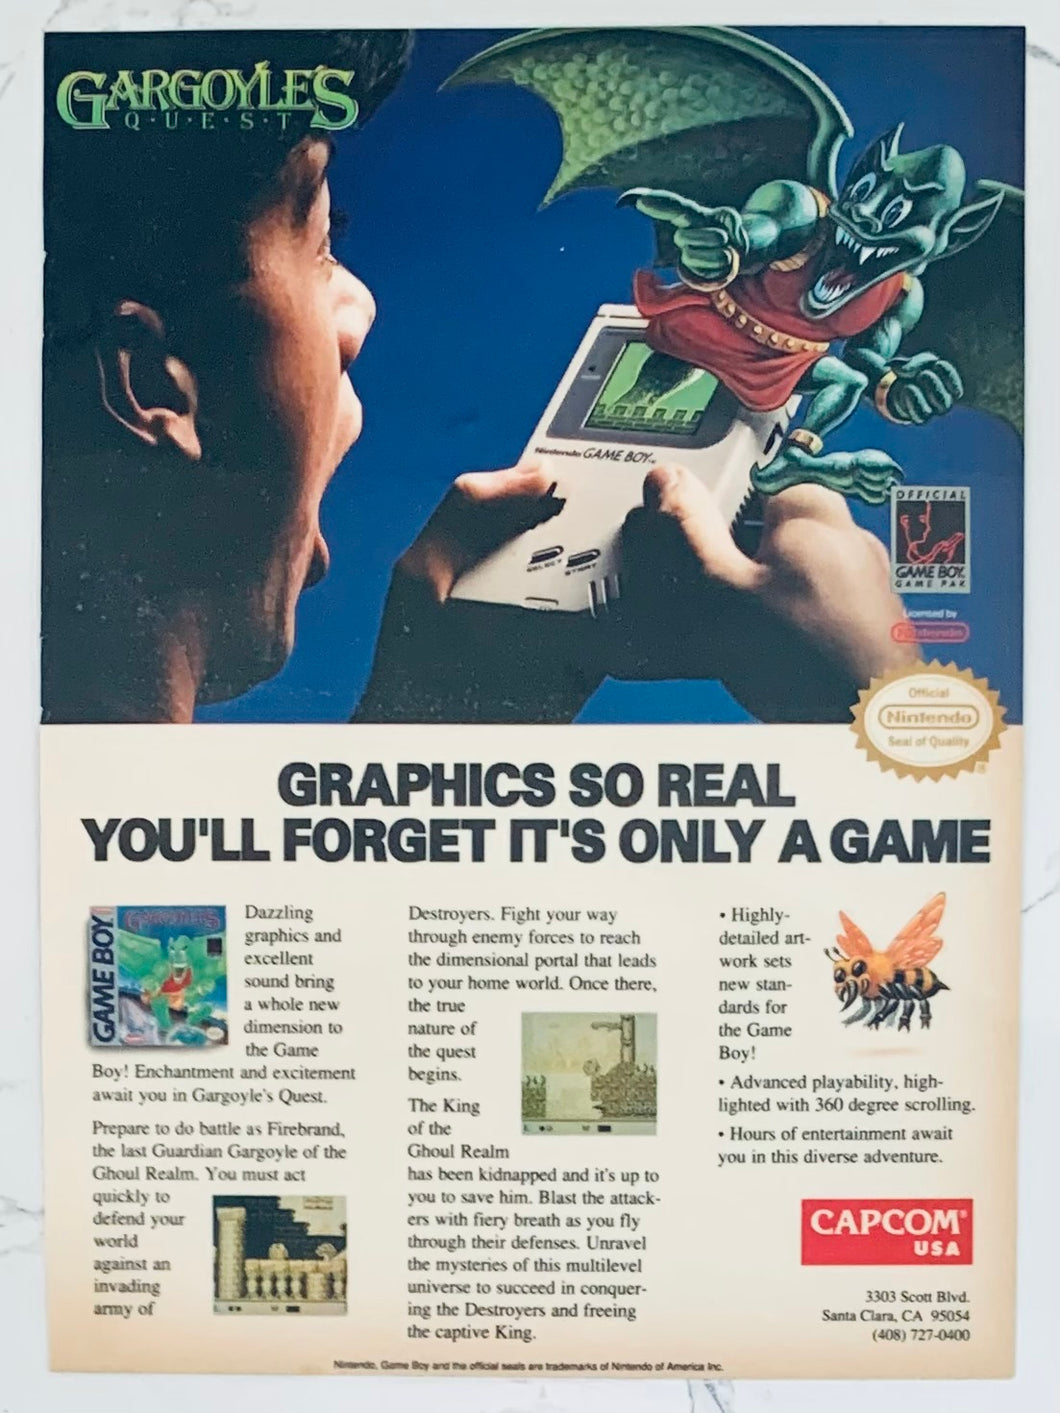 Gargoyle’s Quest - GameBoy - Original Vintage Advertisement - Print Ads - Laminated A4 Poster